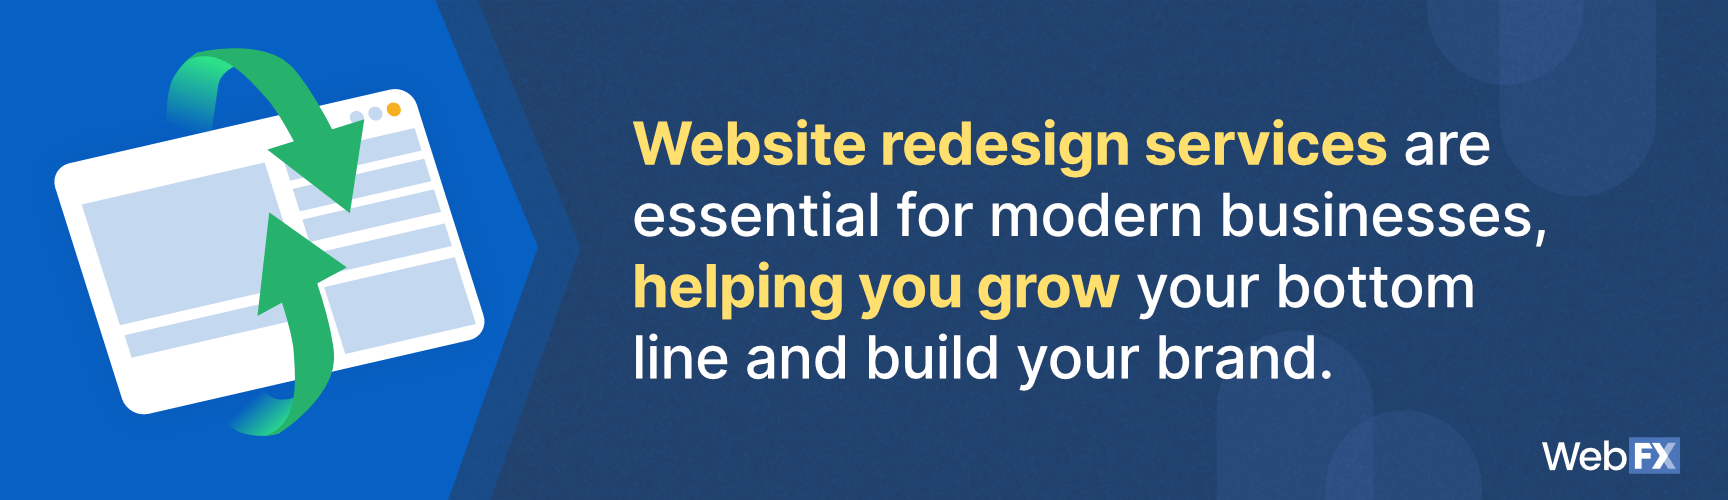 Website redesign services help modern businesses grow their bottom line